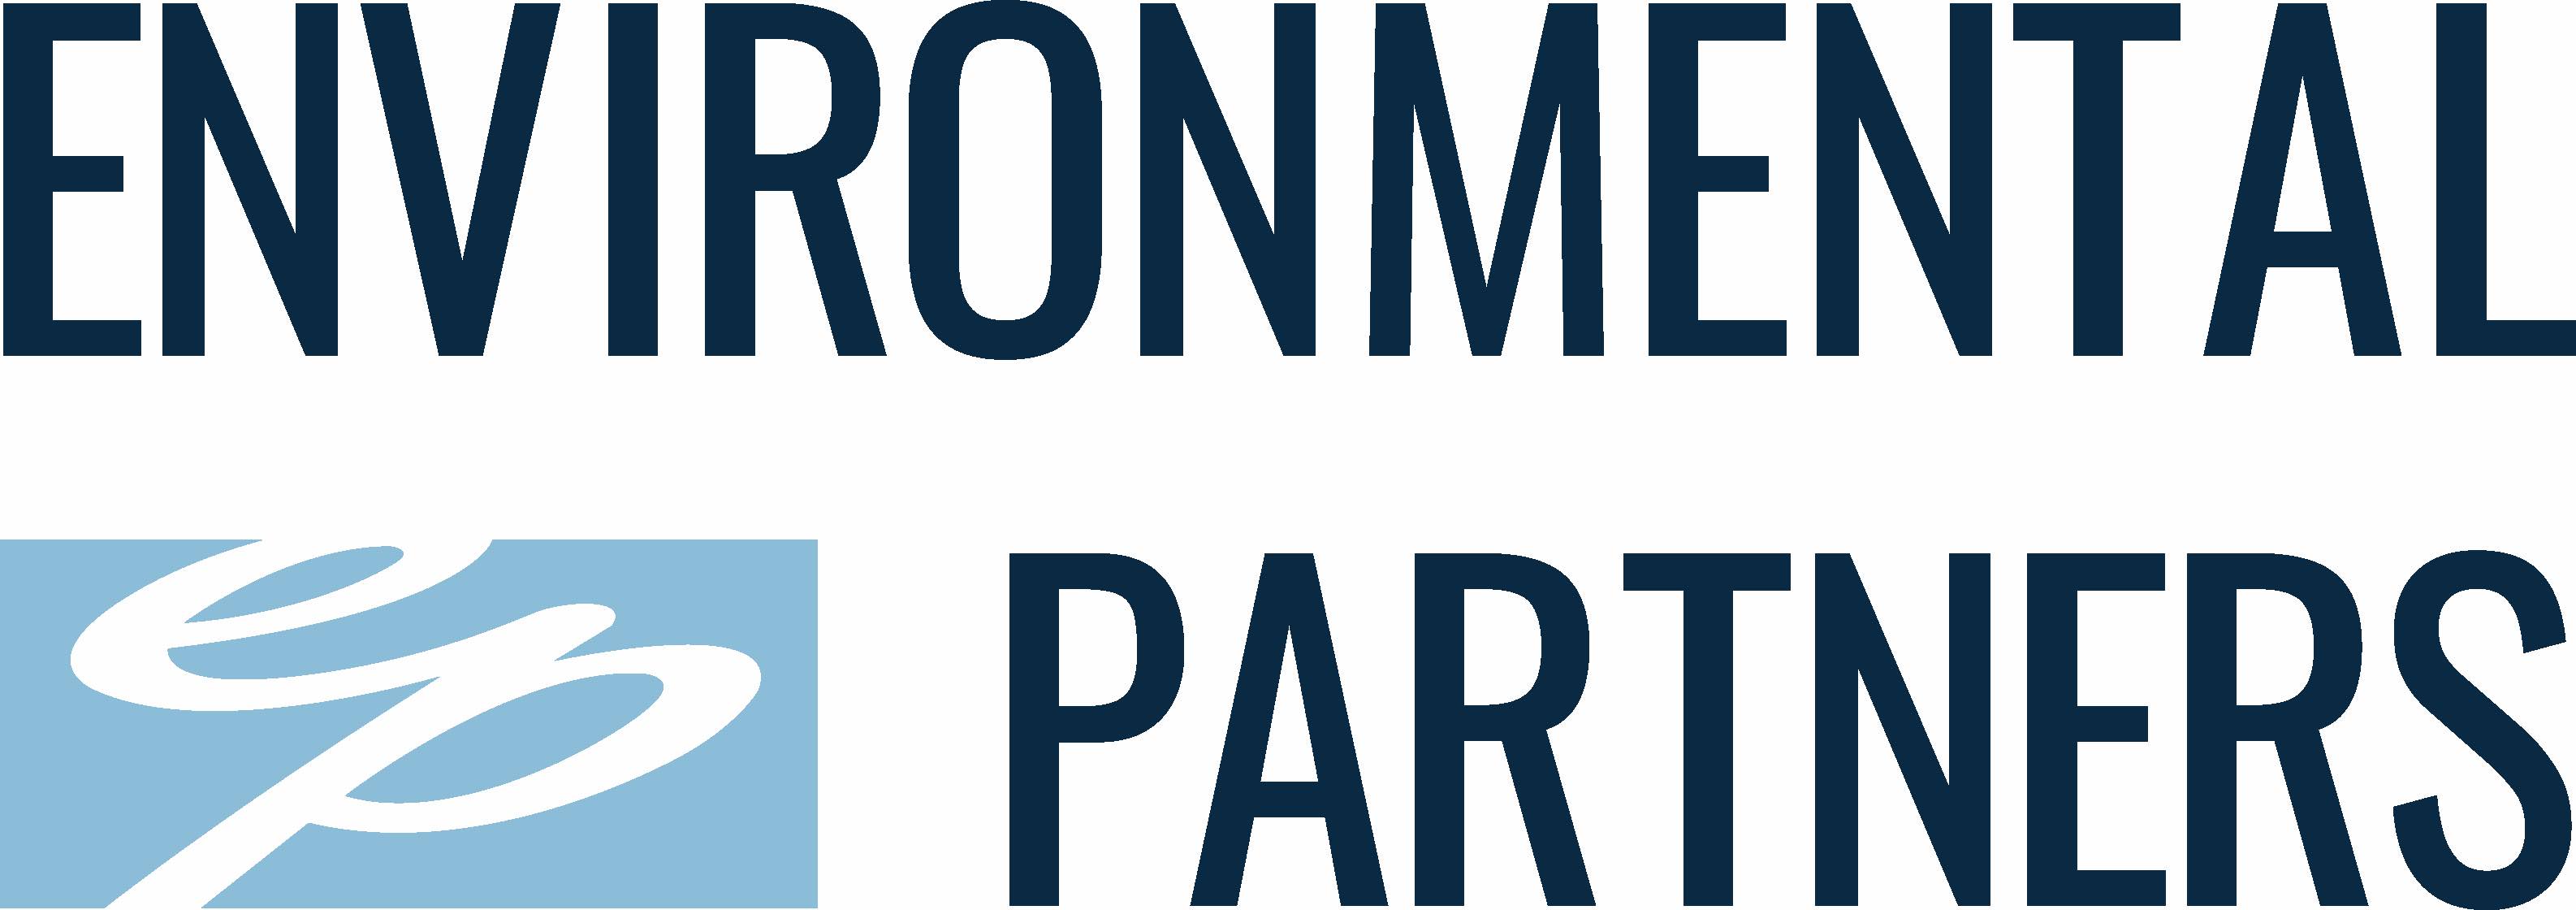 Environmental Partners logo